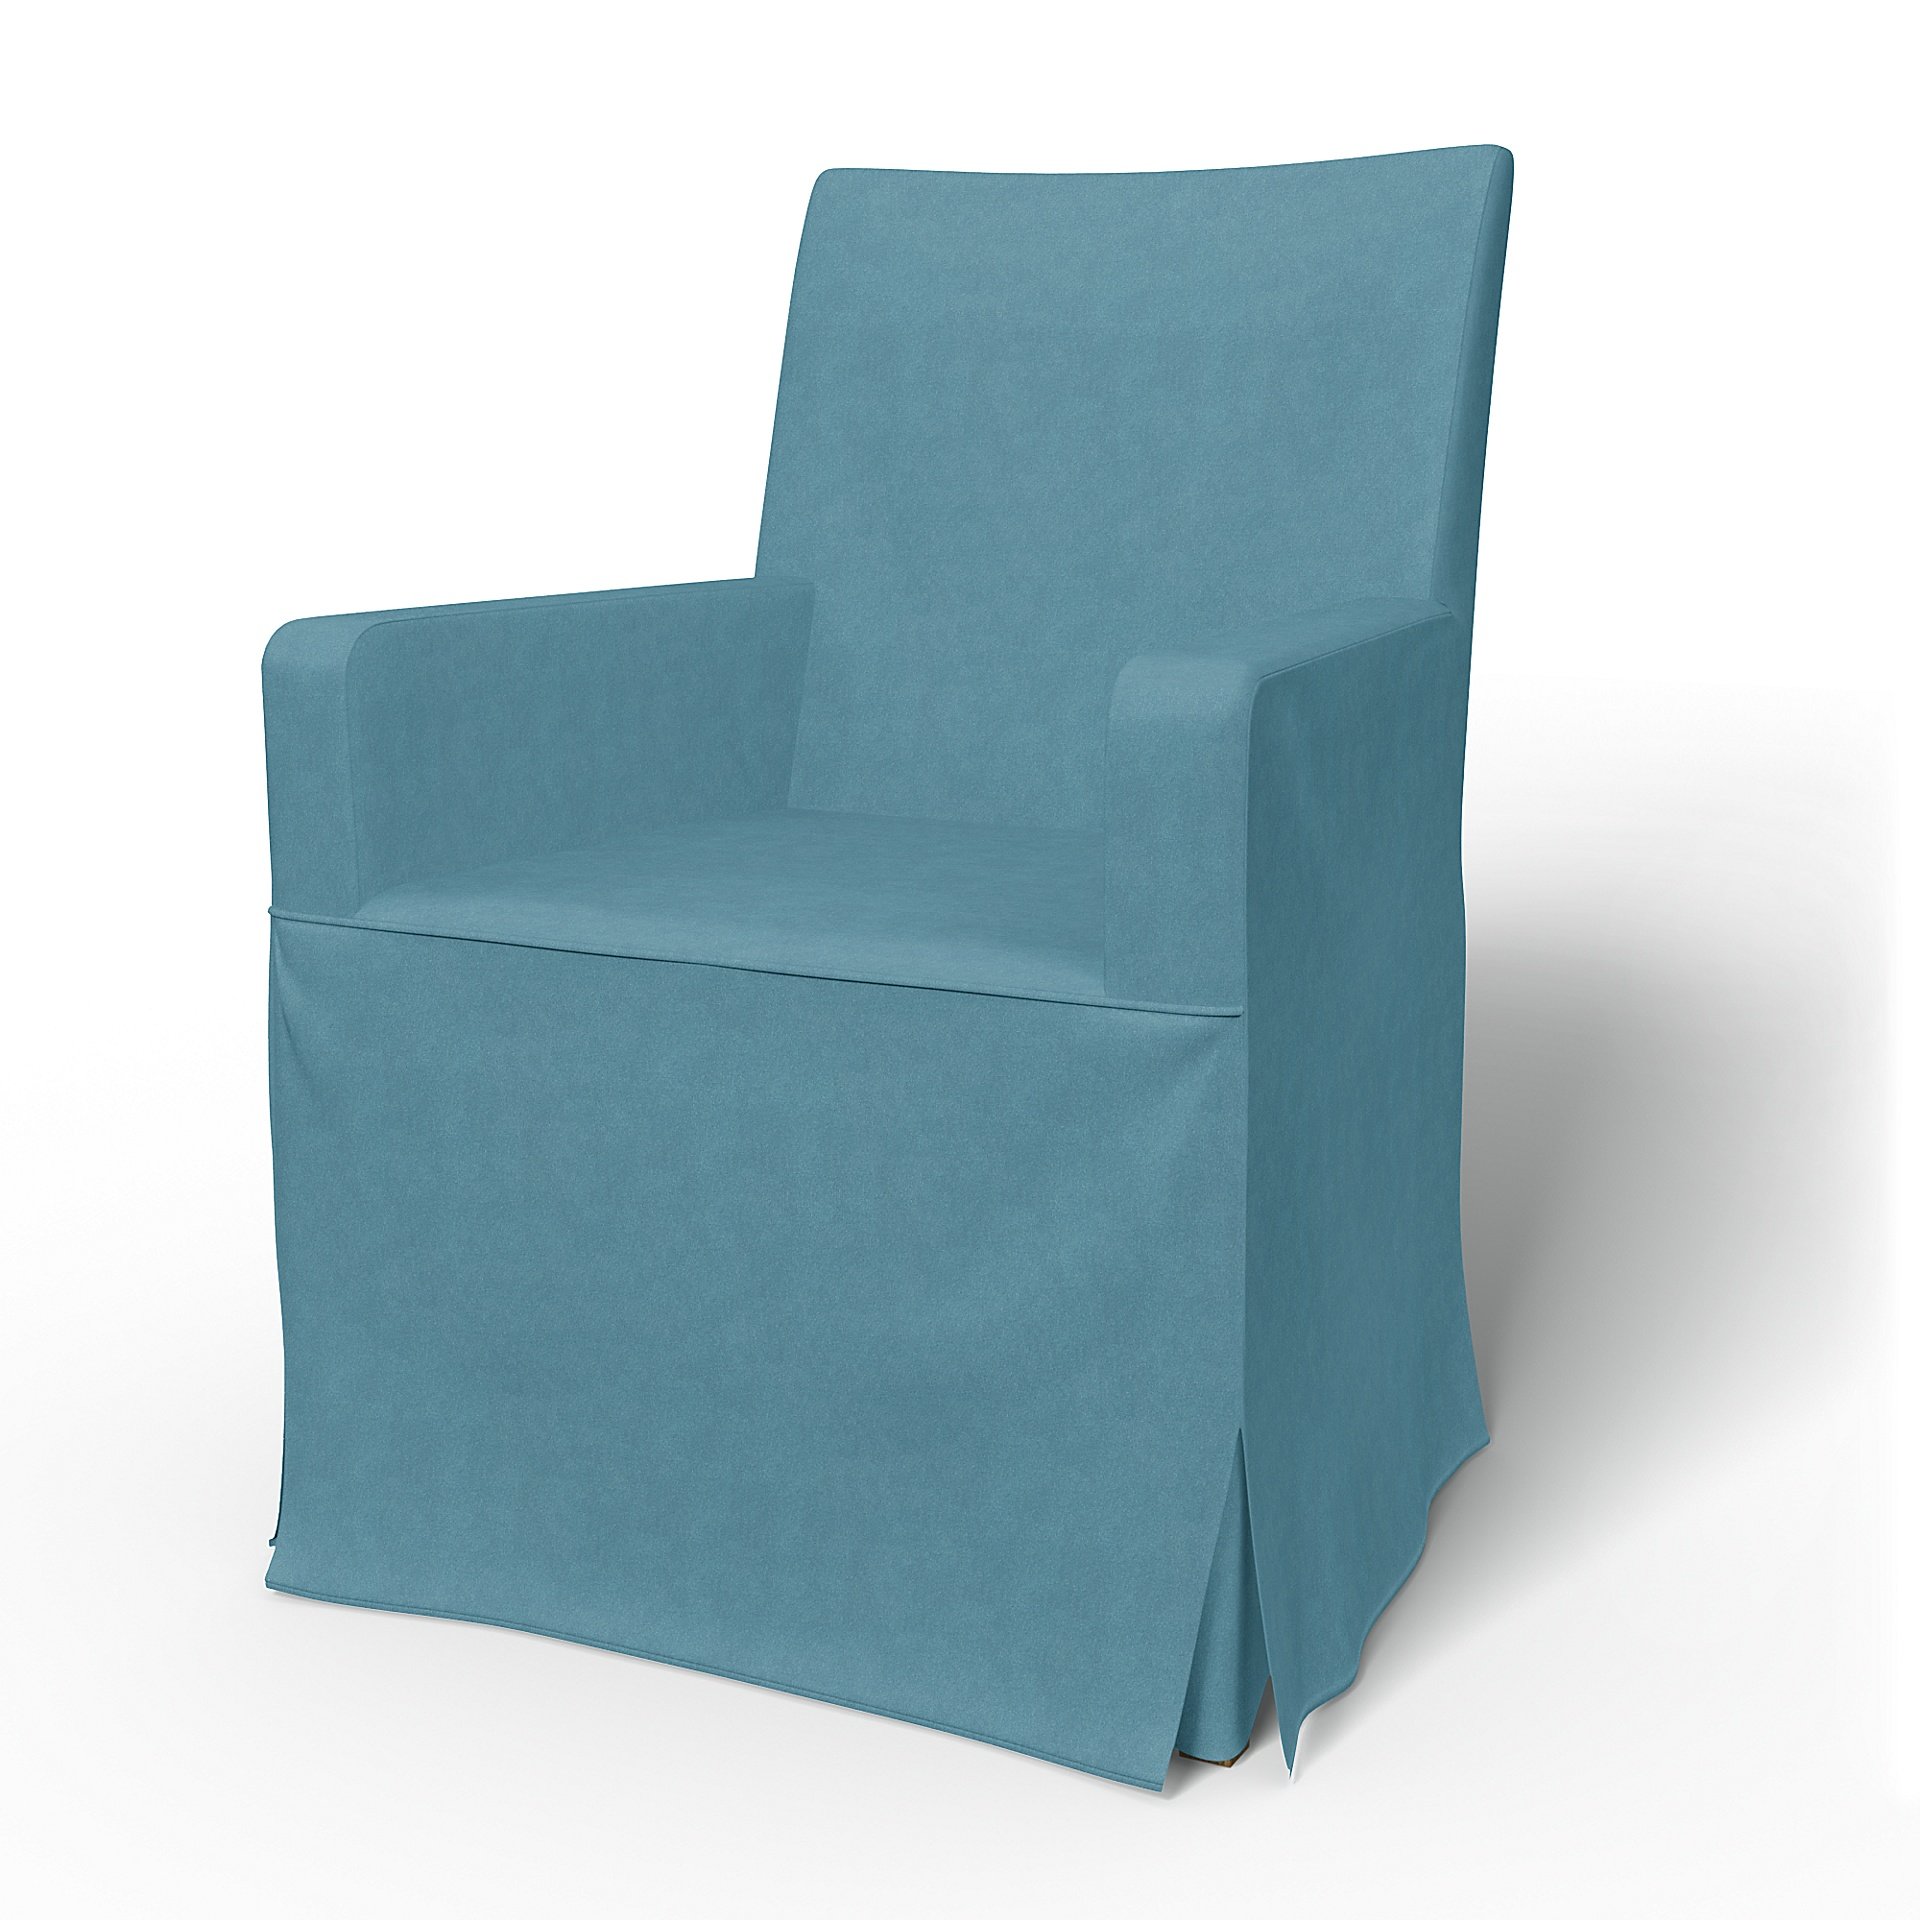 IKEA - Henriksdal, Chair cover w/ armrests, long skirt box pleat, Dusk Blue, Outdoor - Bemz